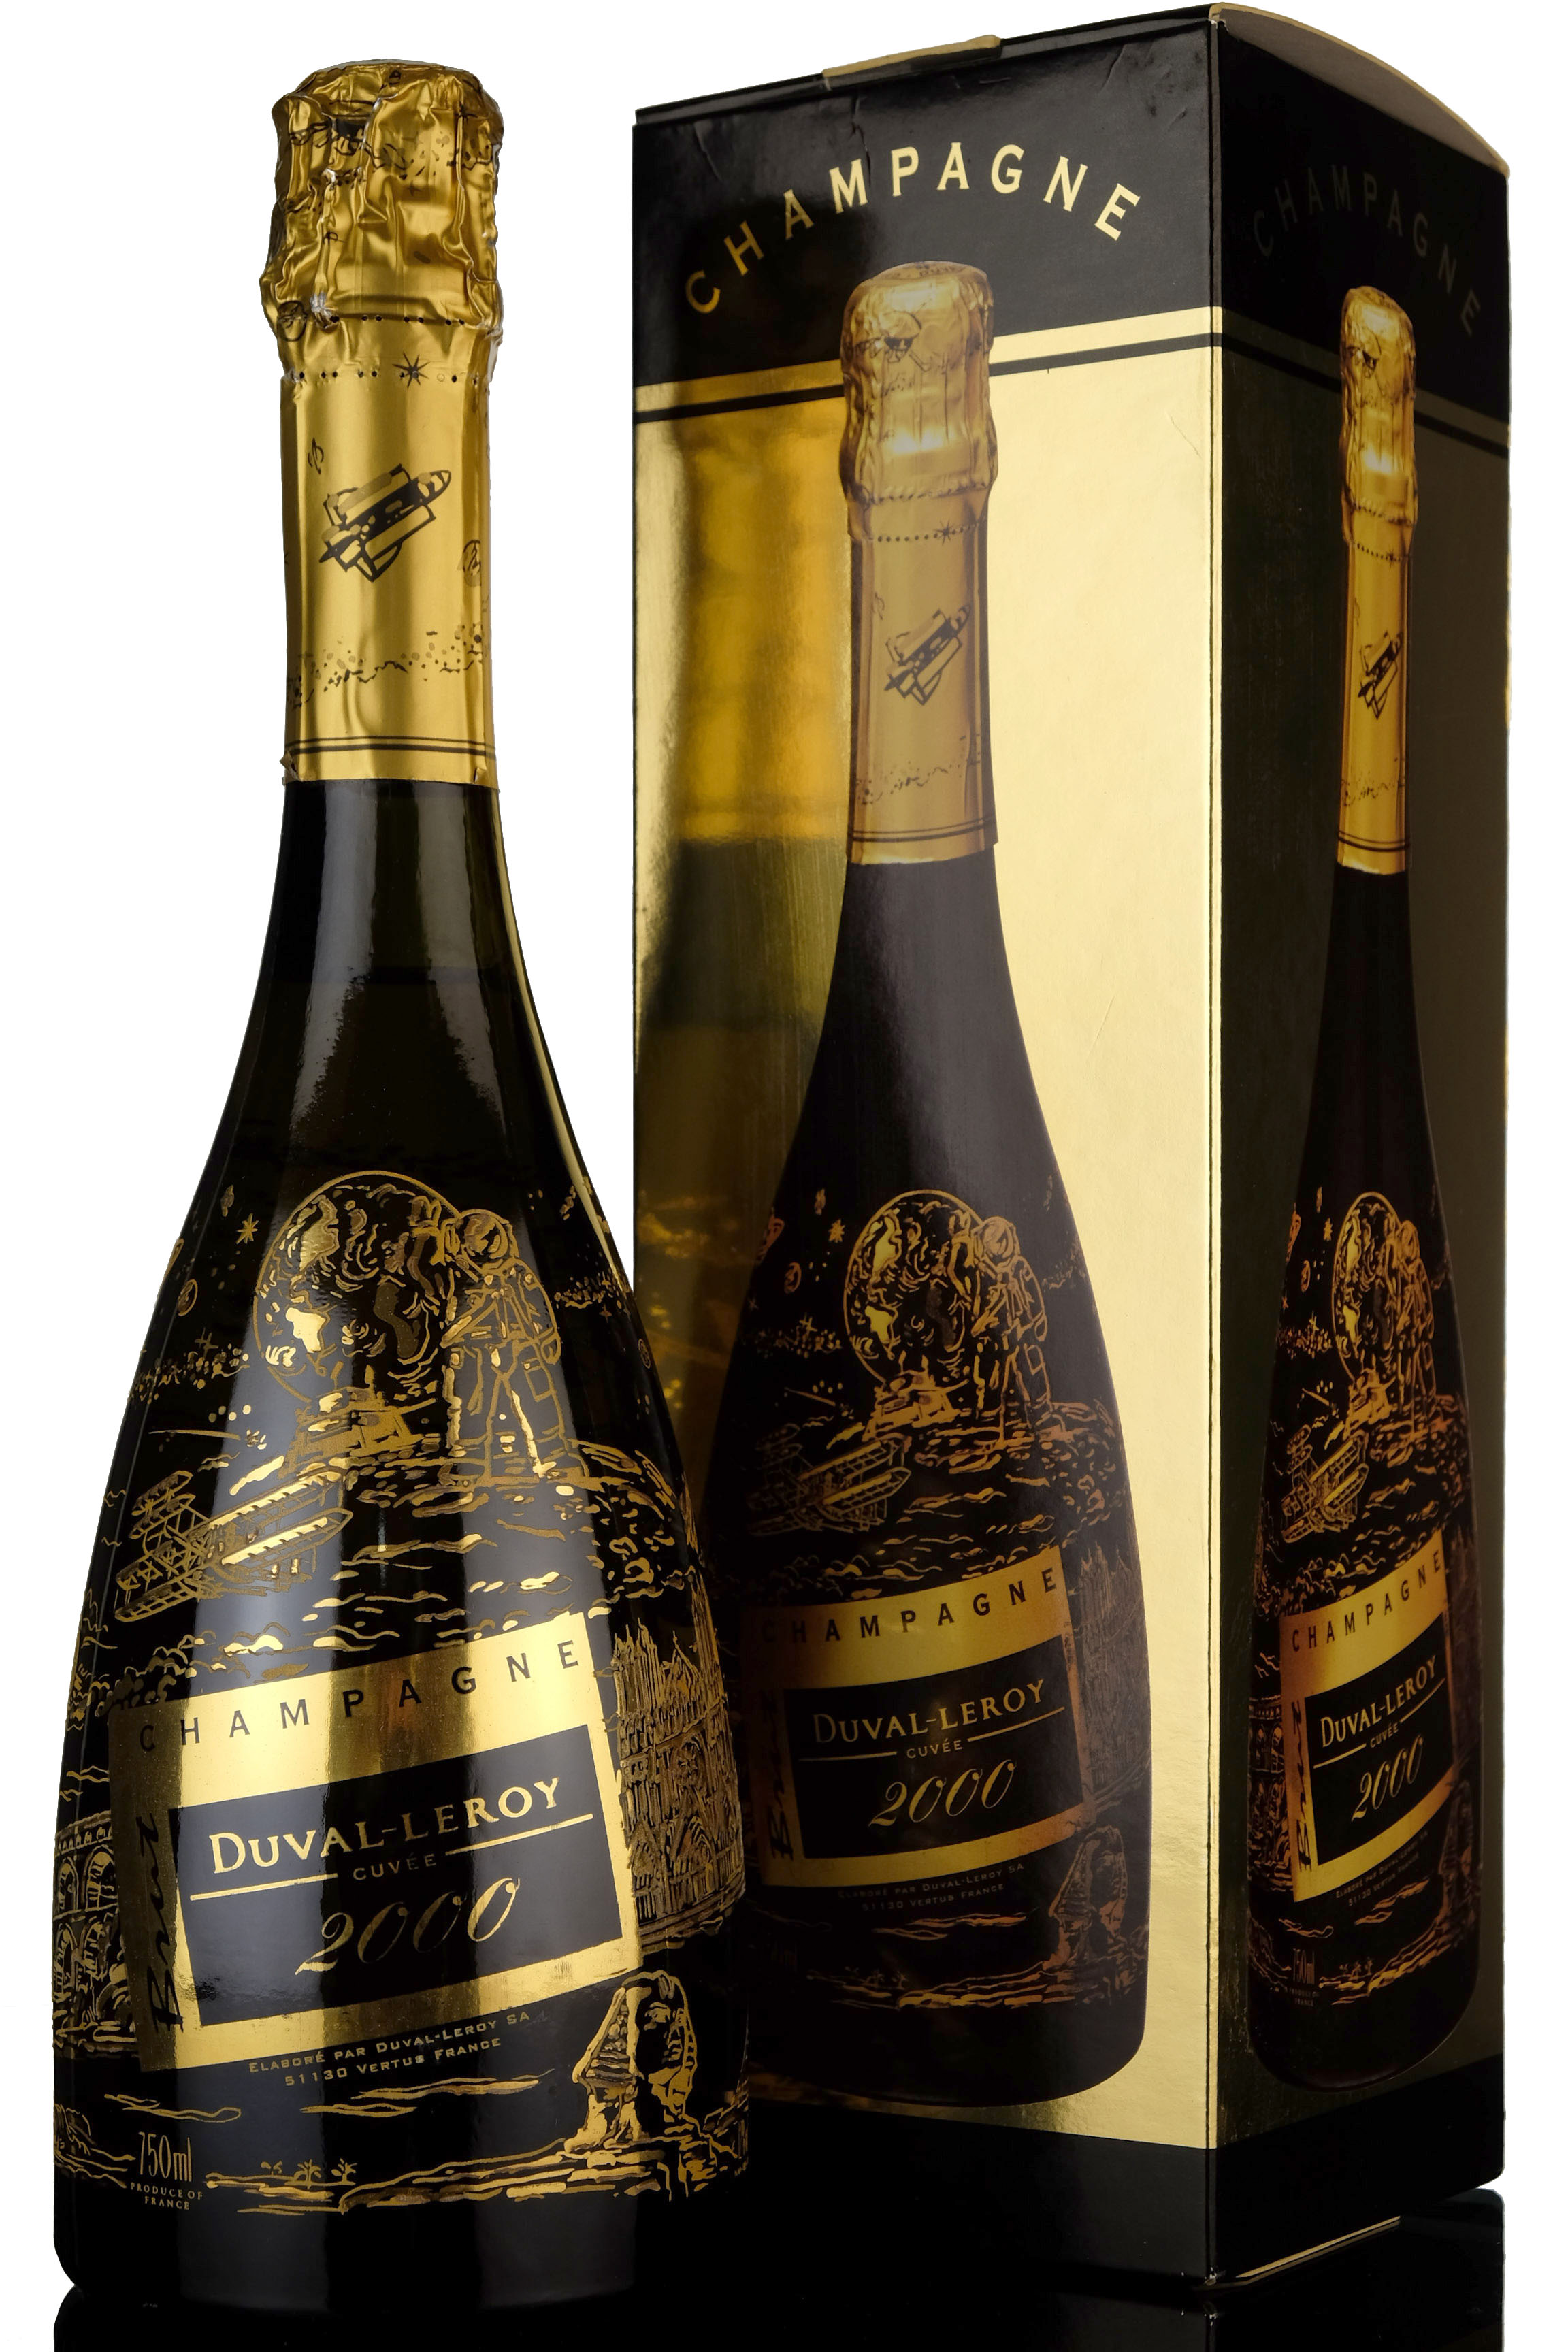 Duval-Leroy Cuvee 2000 Champagne